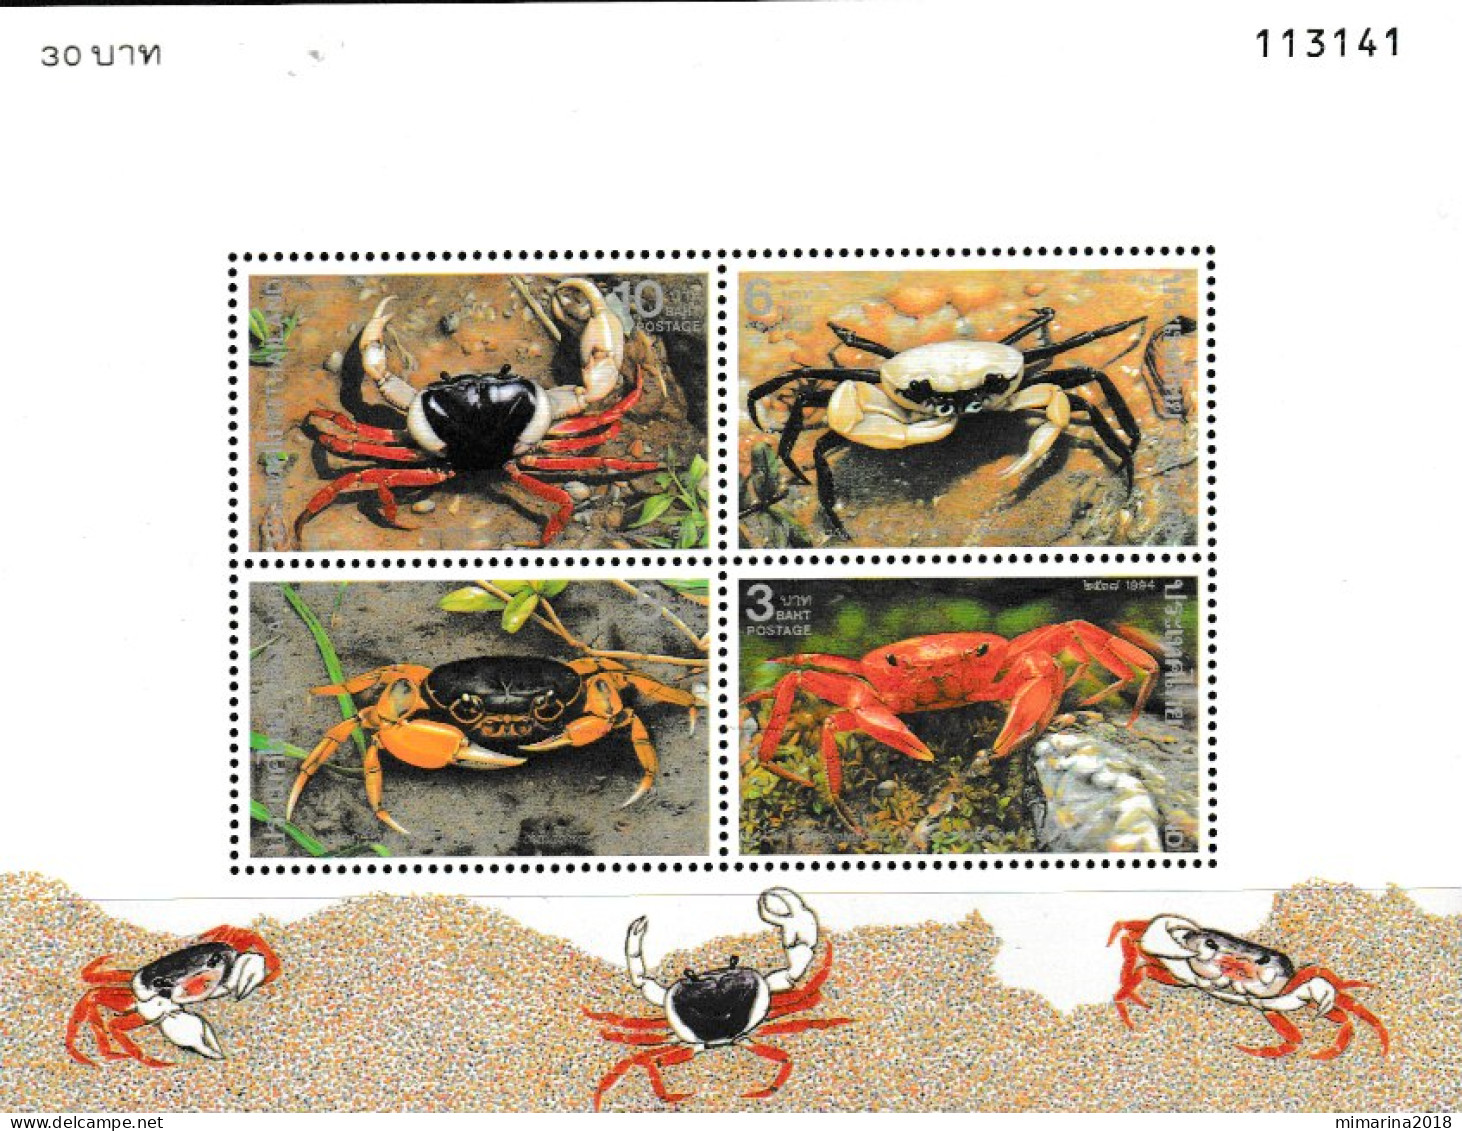 THAILAND  1994  MNH  "CRUSTACEOS" - Crustaceans